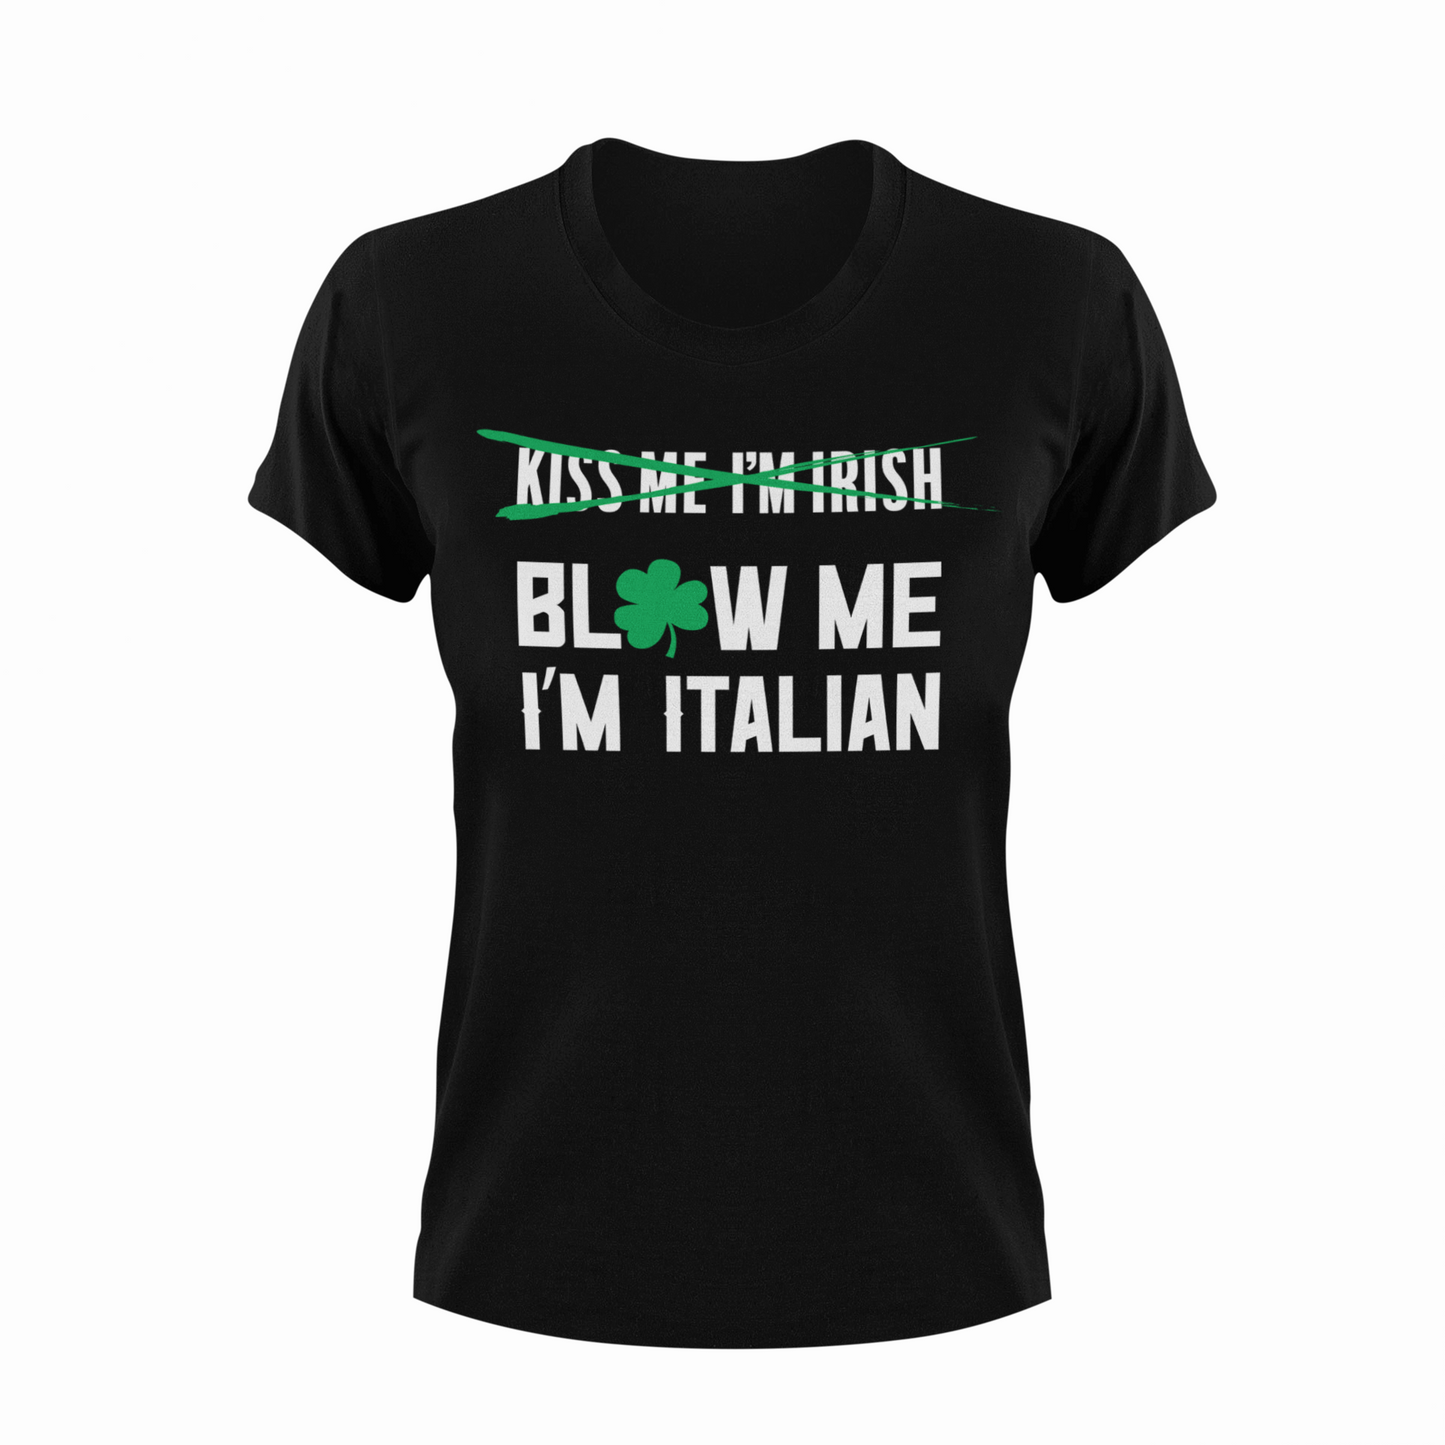 Blow Me I'm Italian Unisex Shirt